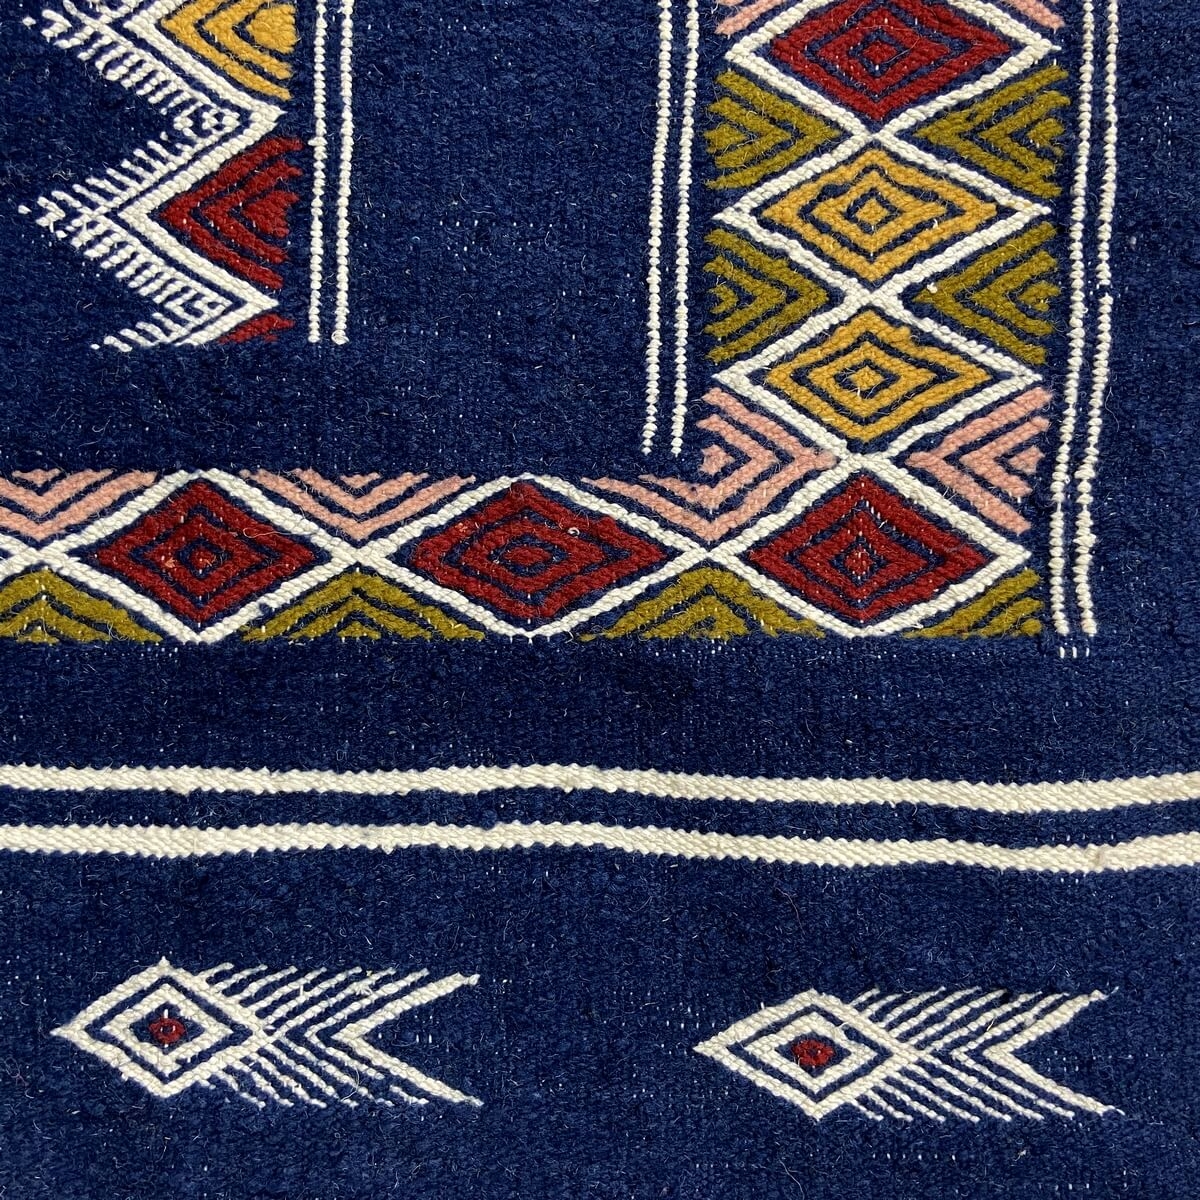 Berber tapijt Tapijt Kilim Laarbi 135x235 Blauw (Handgeweven, Wol, Tunesië) Tunesisch kilimdeken, Marokkaanse stijl. Rechthoekig